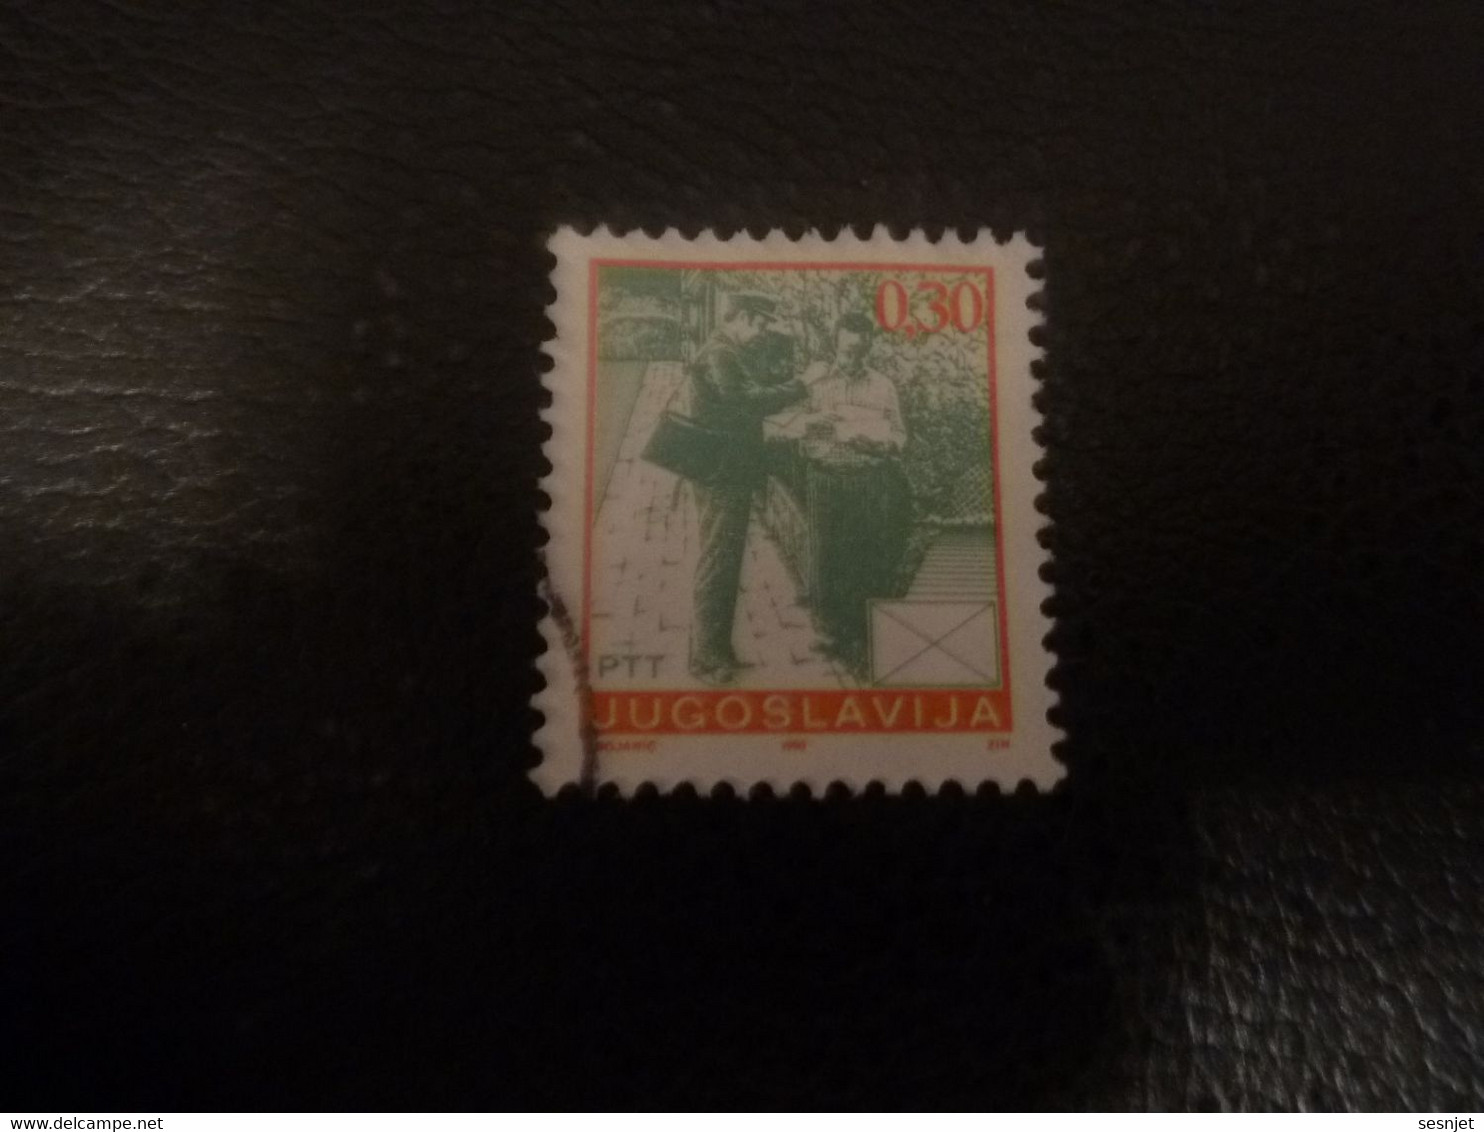 Ptt - Jugoslavija - Val 0.30 - Vert Et Orange - Oblitéré - - Used Stamps